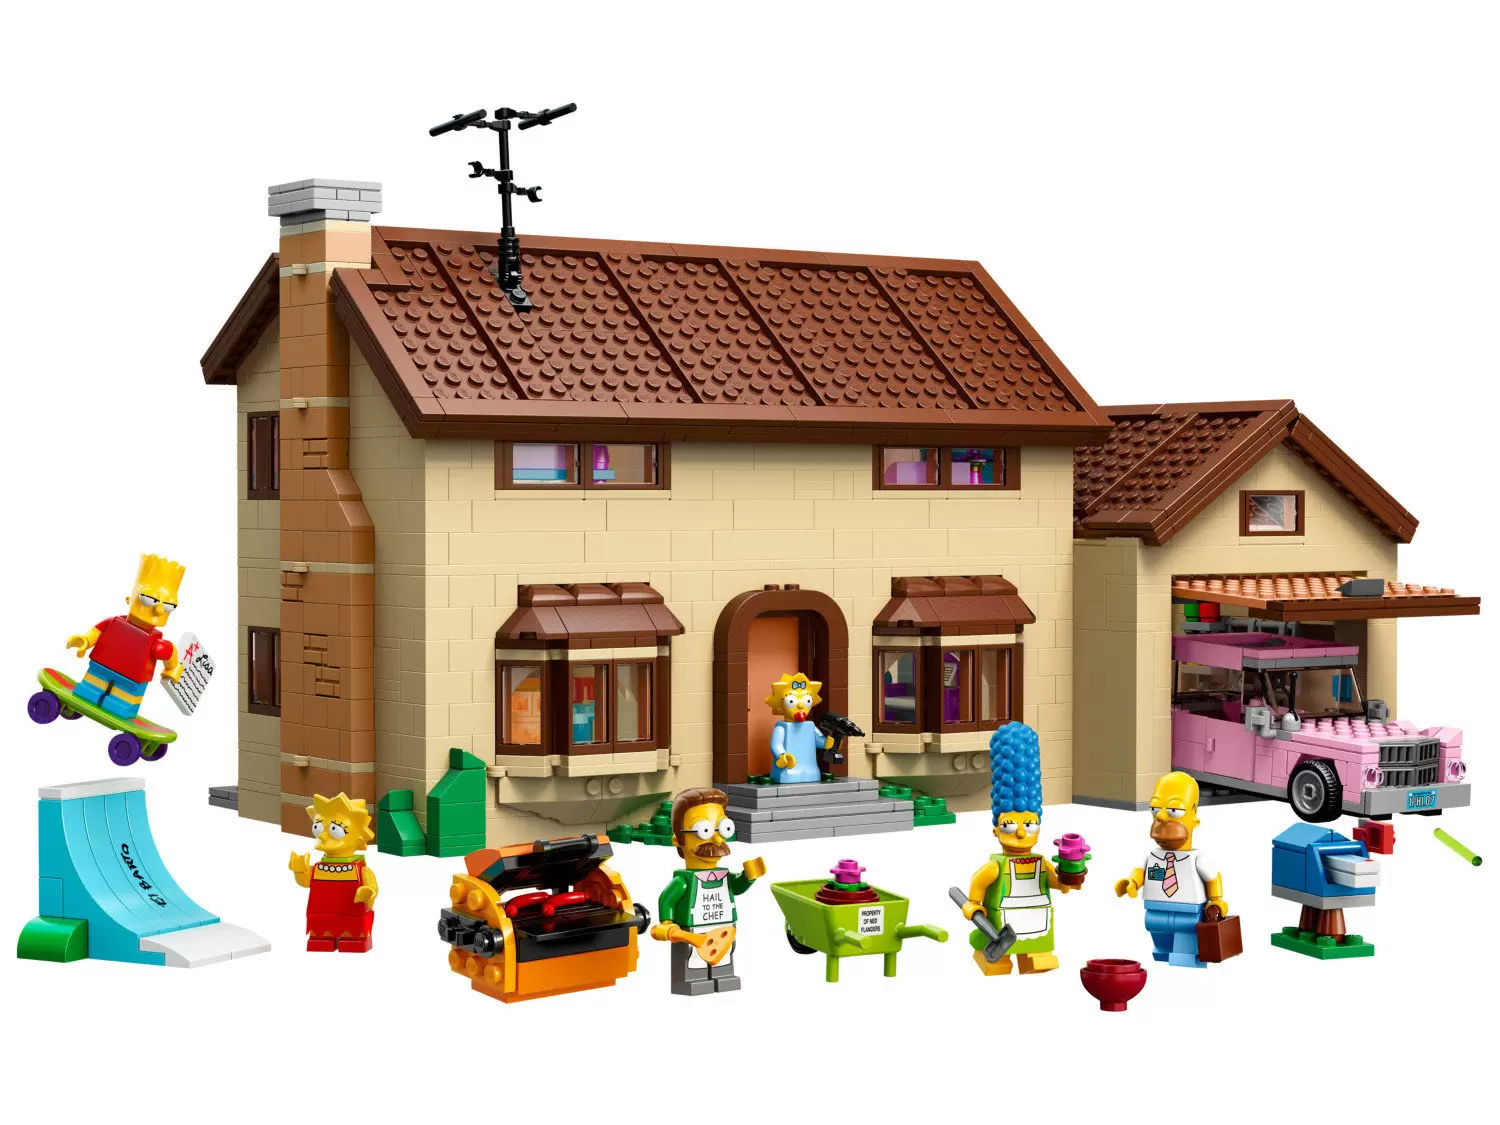 LEGO Simpson - The Simpsons House